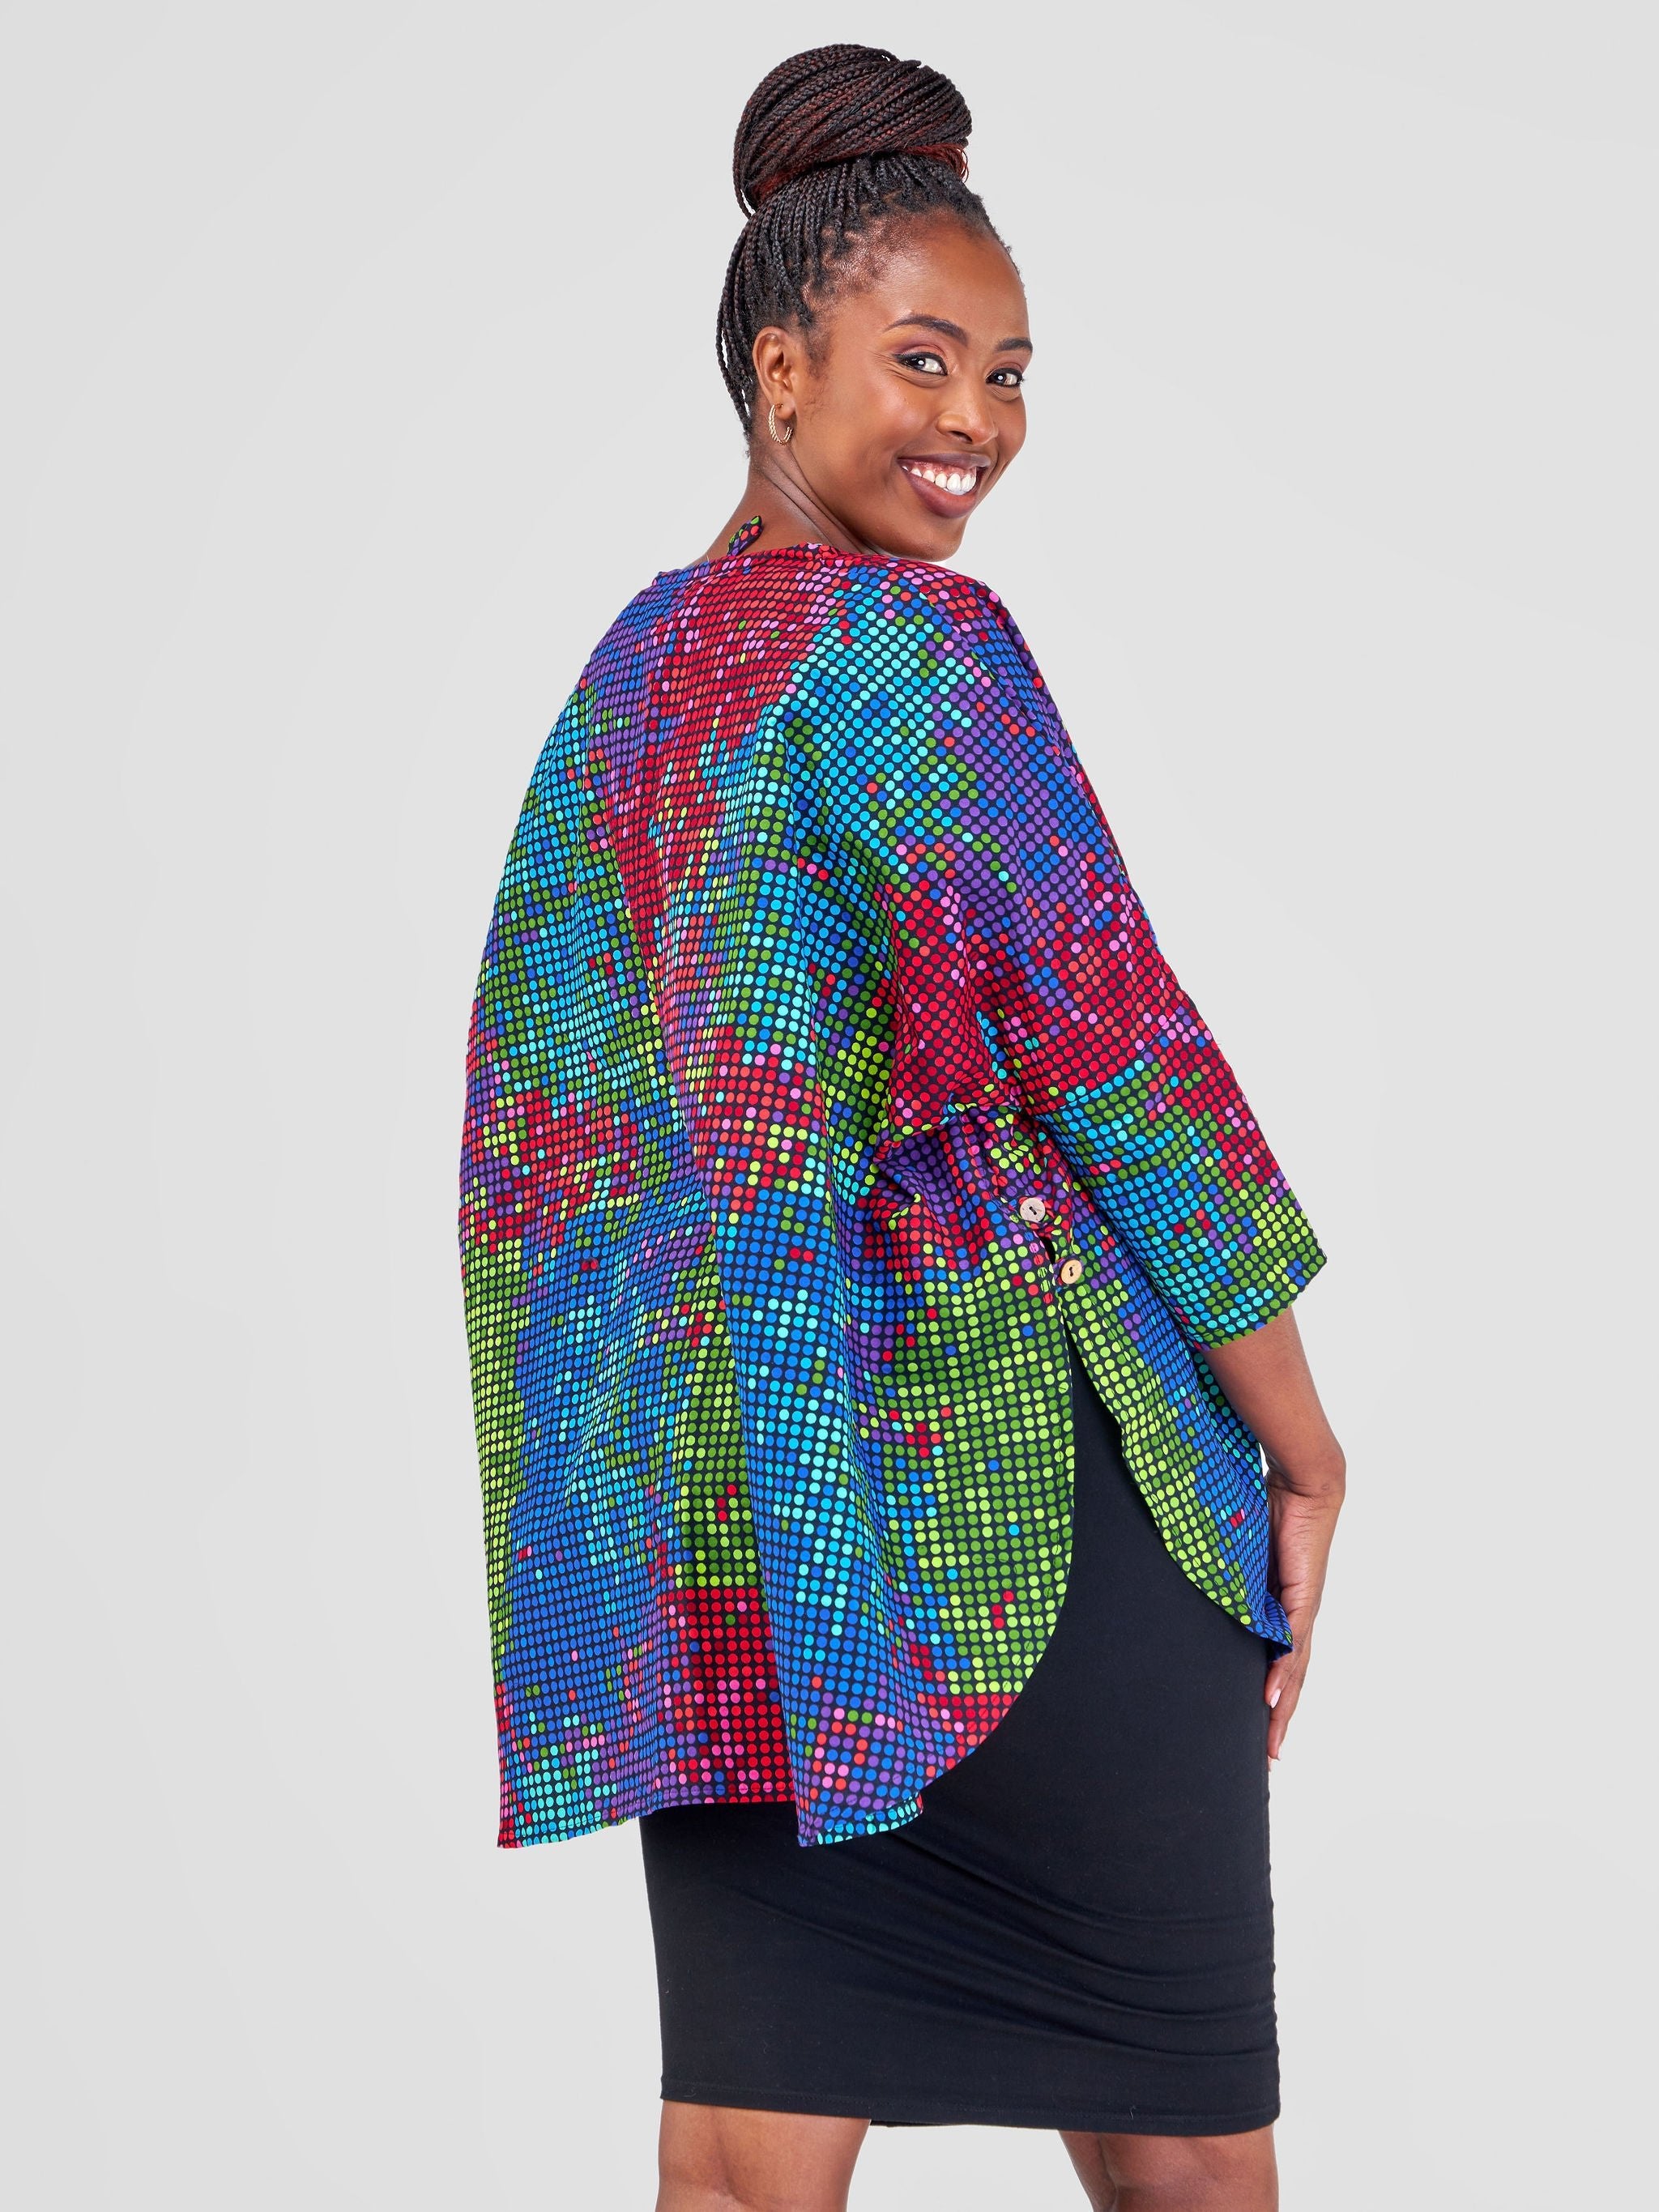 Kimono für Alltag, Strand oder Pool ‚Kaleidoscope‘ - mikono.africa Jacken aus Kenia bunte Bomberjacke Partyjacke faire sozial nachhaltig designed in Kenia